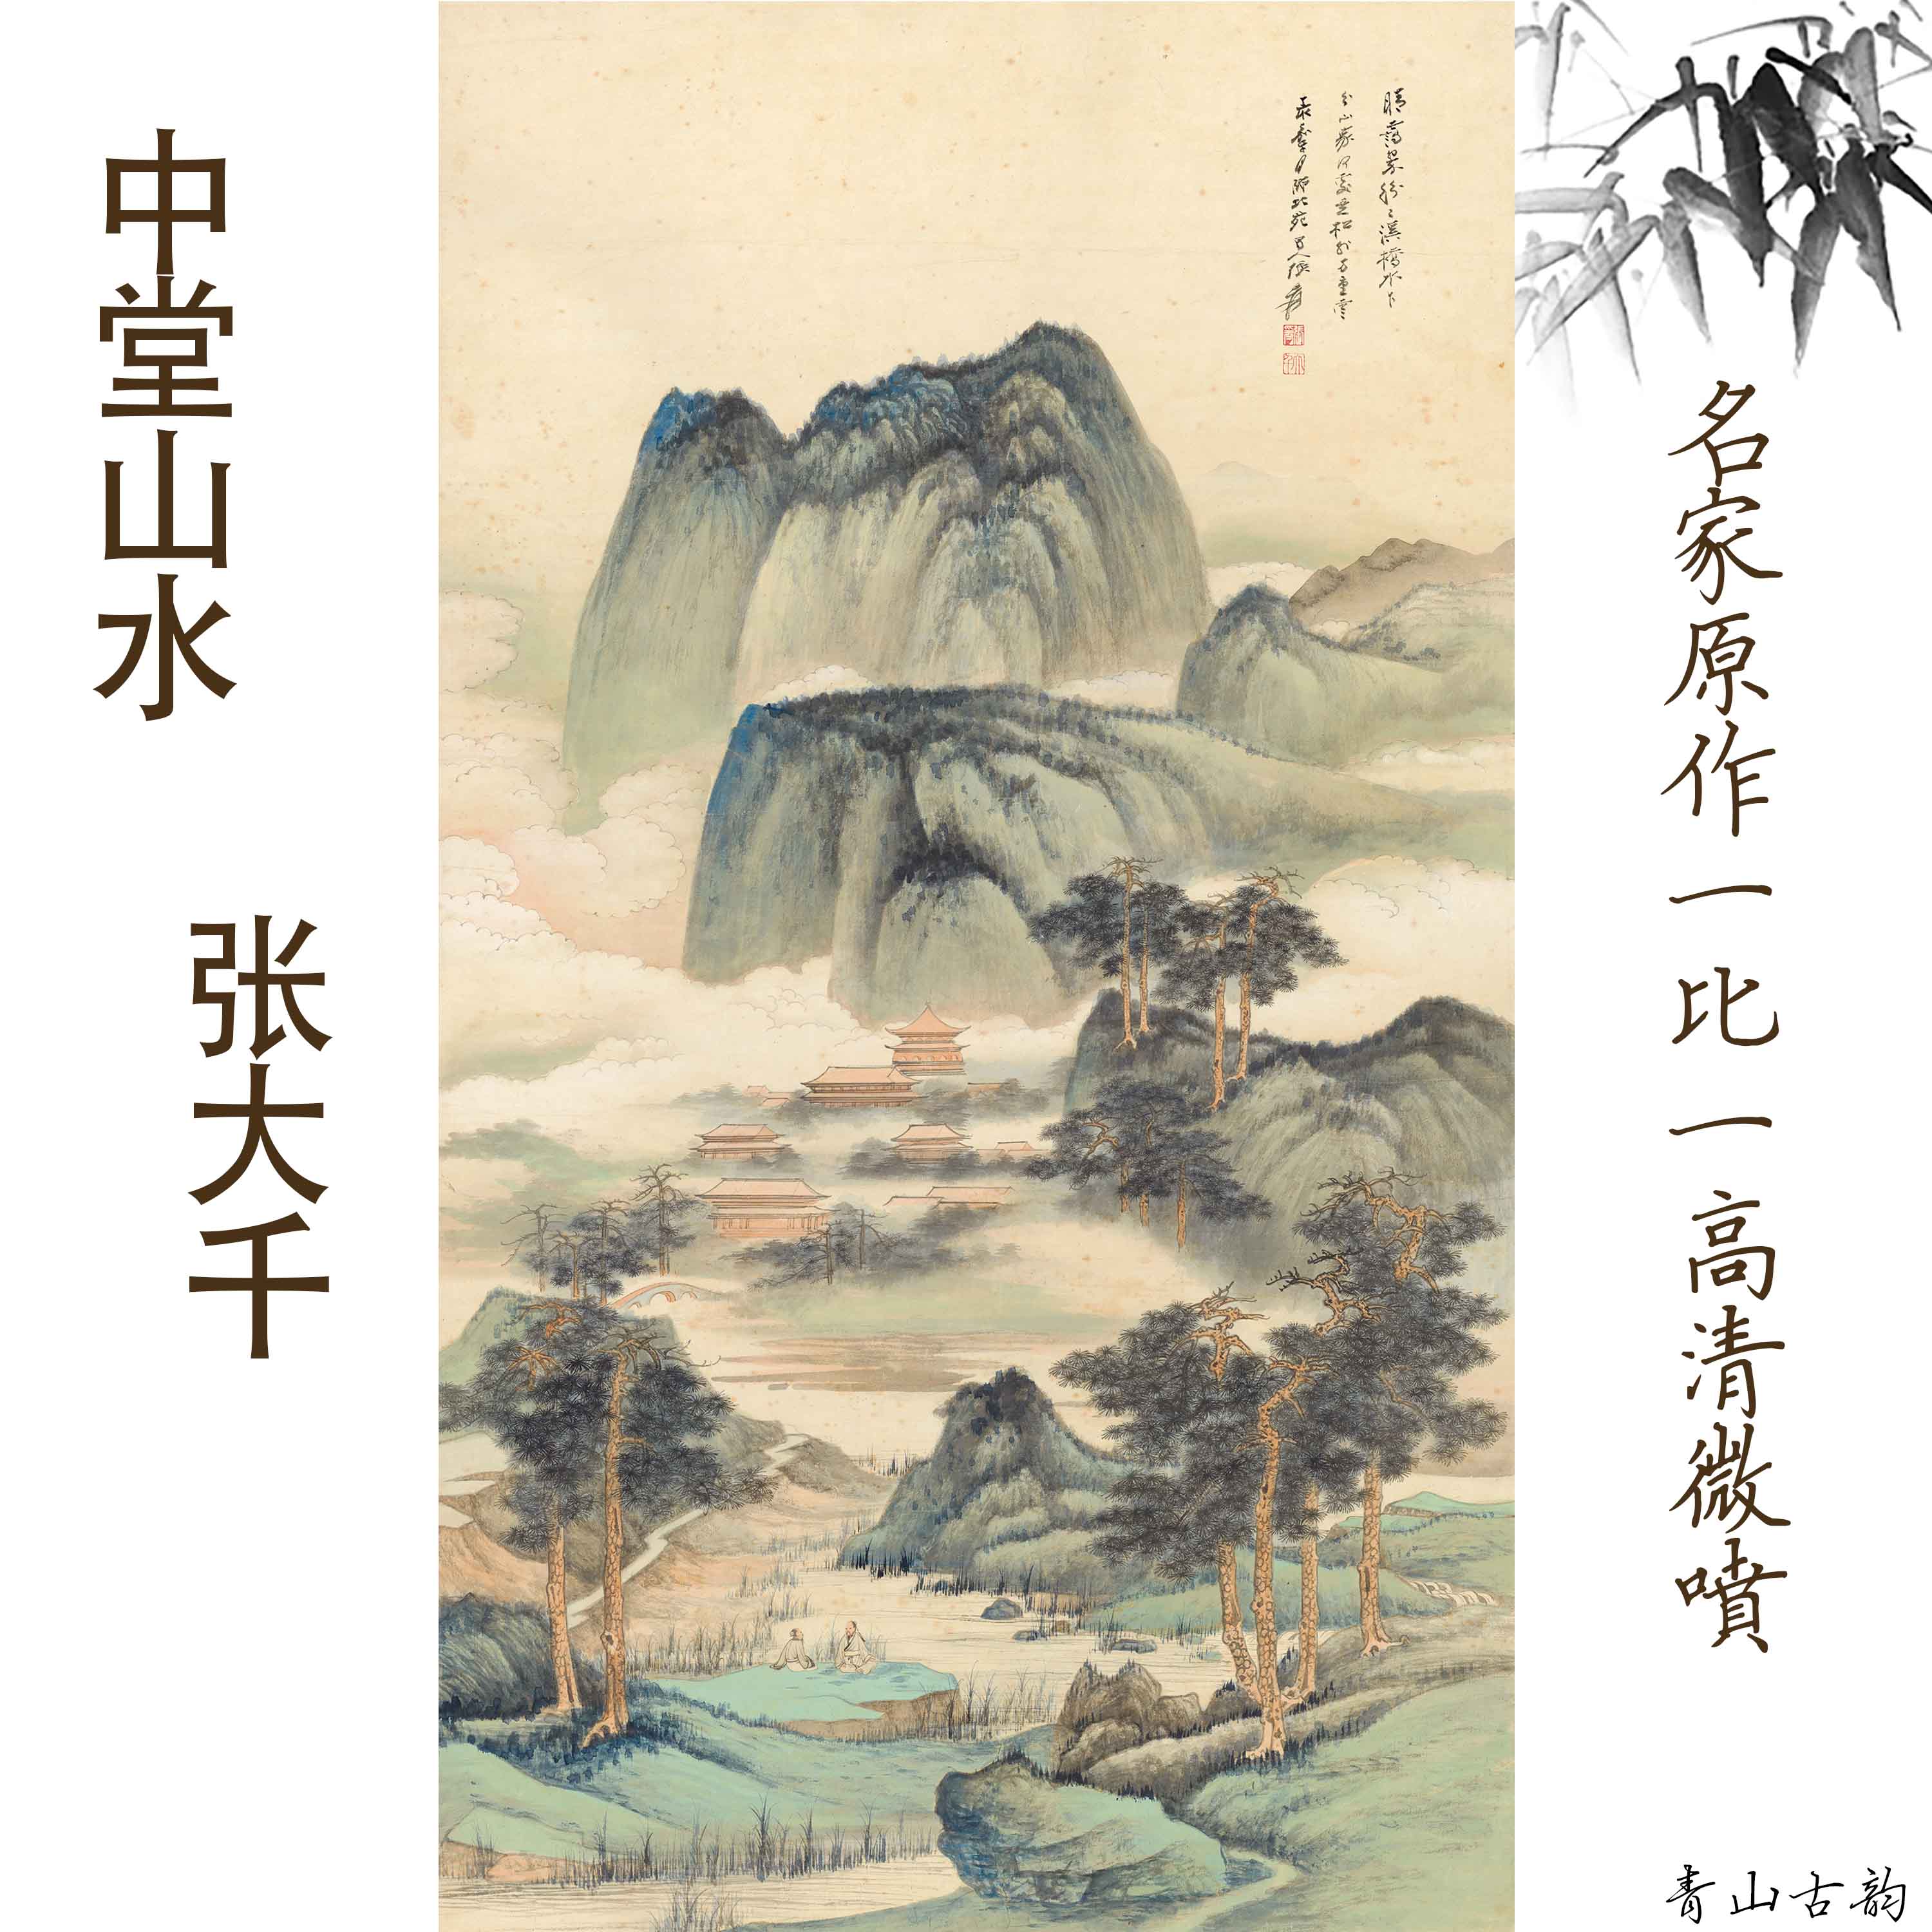 Chinese Antique Art Painting 张大千 中堂山水 Zhang Daqian Zhongtang Landscape